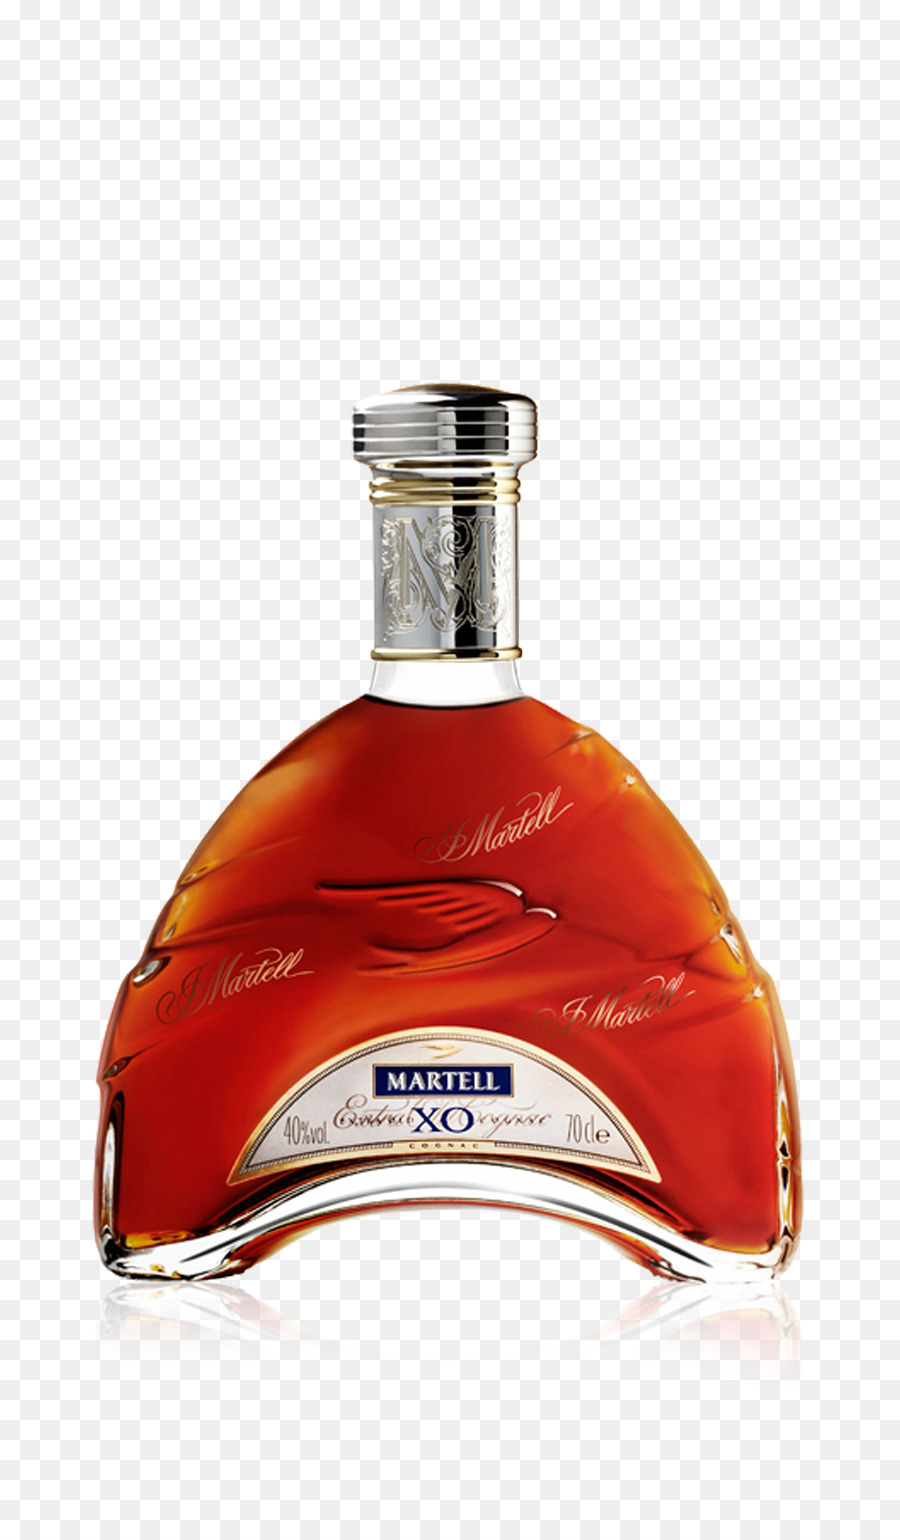 Cognac Liquore Vino Martell Molto Speciale Antico Pallido - Cognac